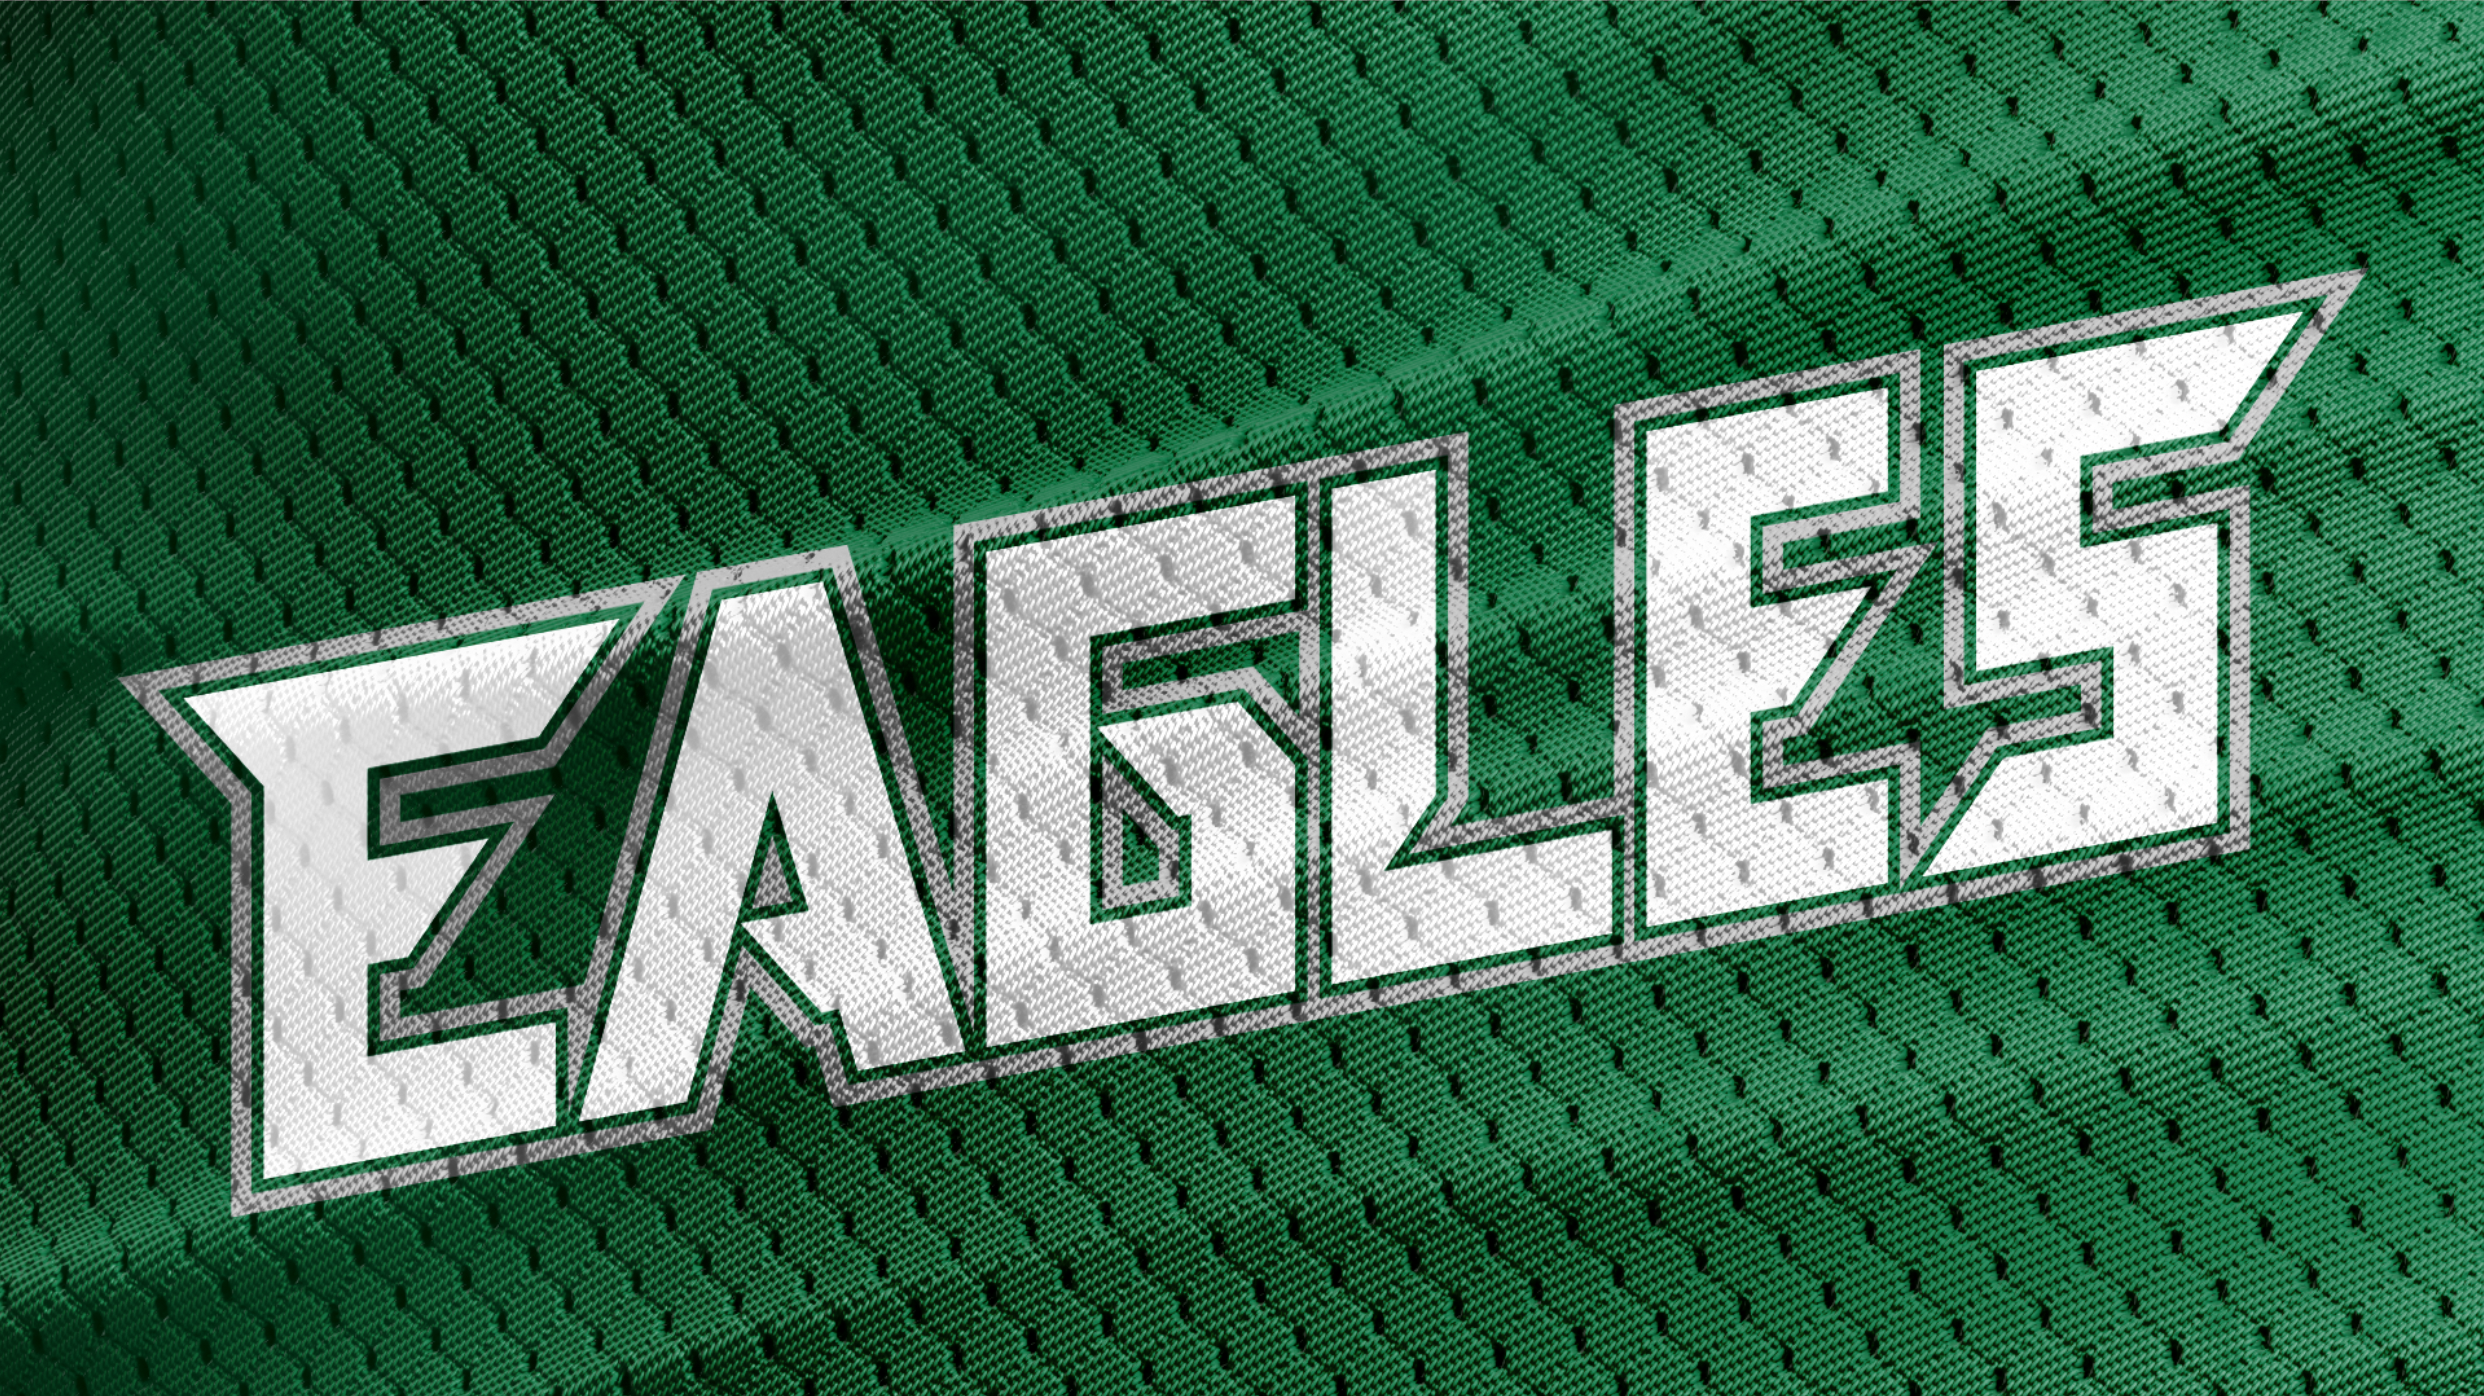 Philadelphia Eagles Uniform Concept by Jacob Brooks on Dribbble